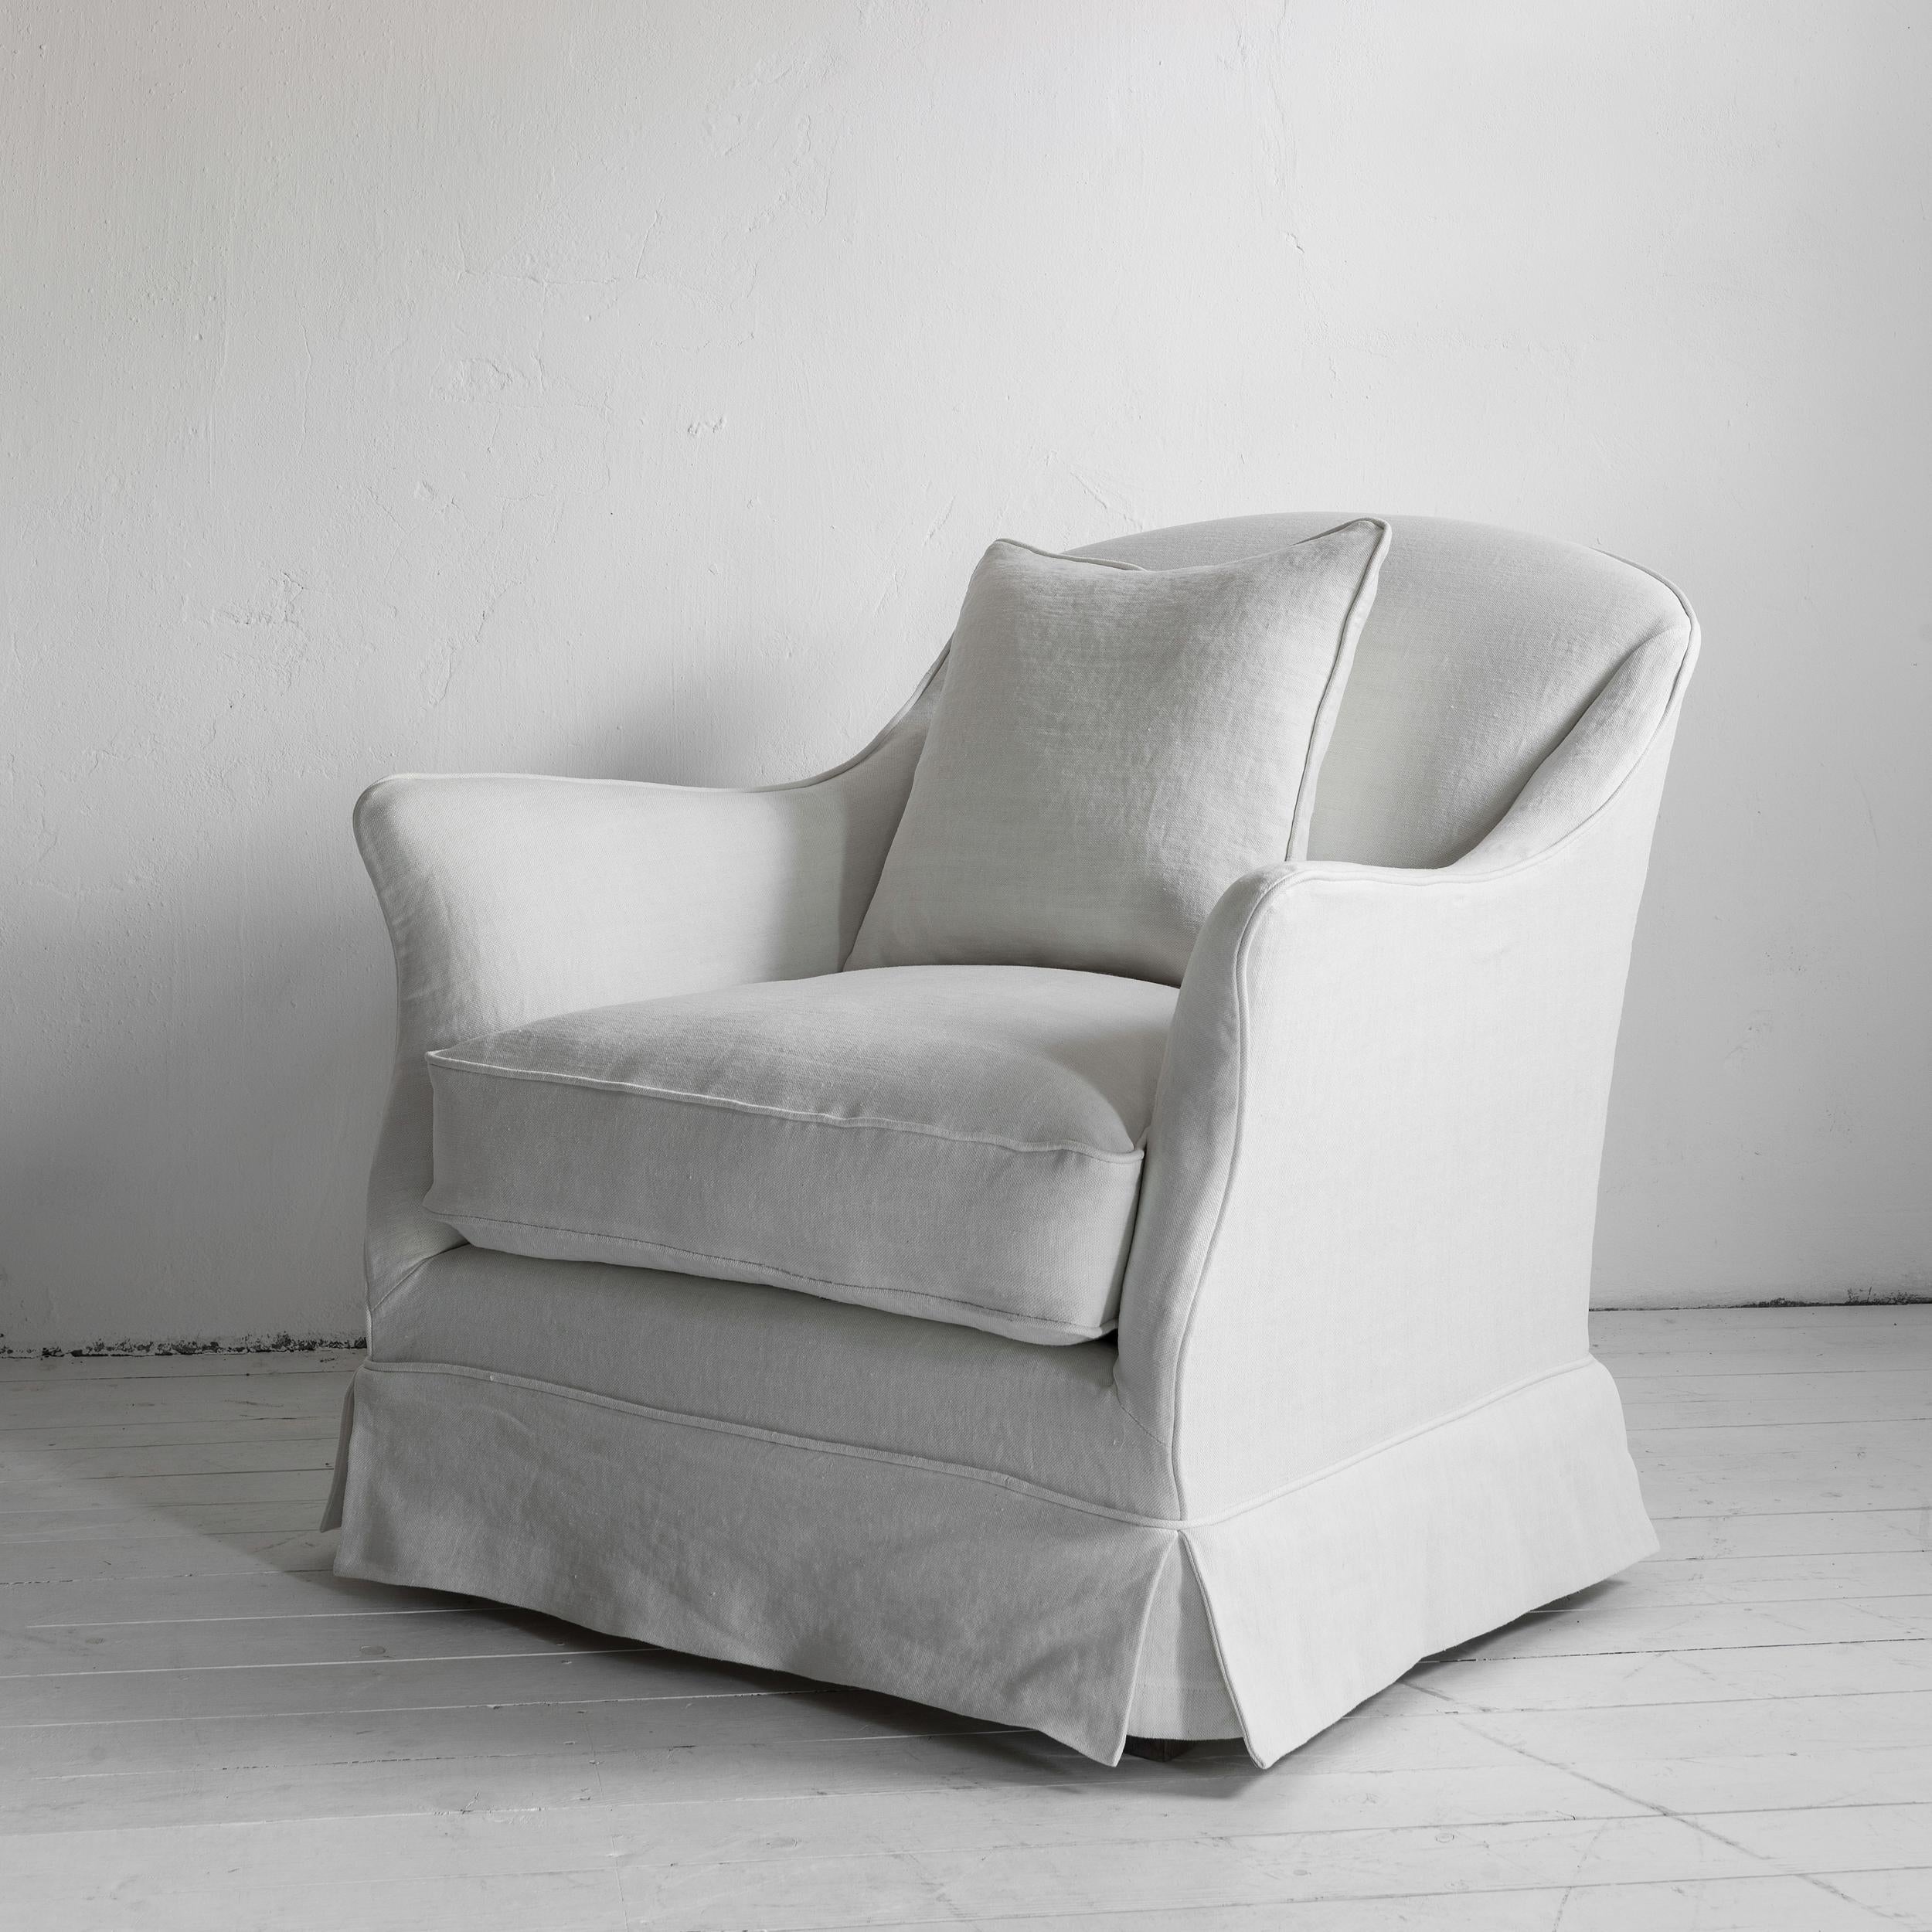 Lin The Salon, fauteuil en lin belge sur mesure en vente